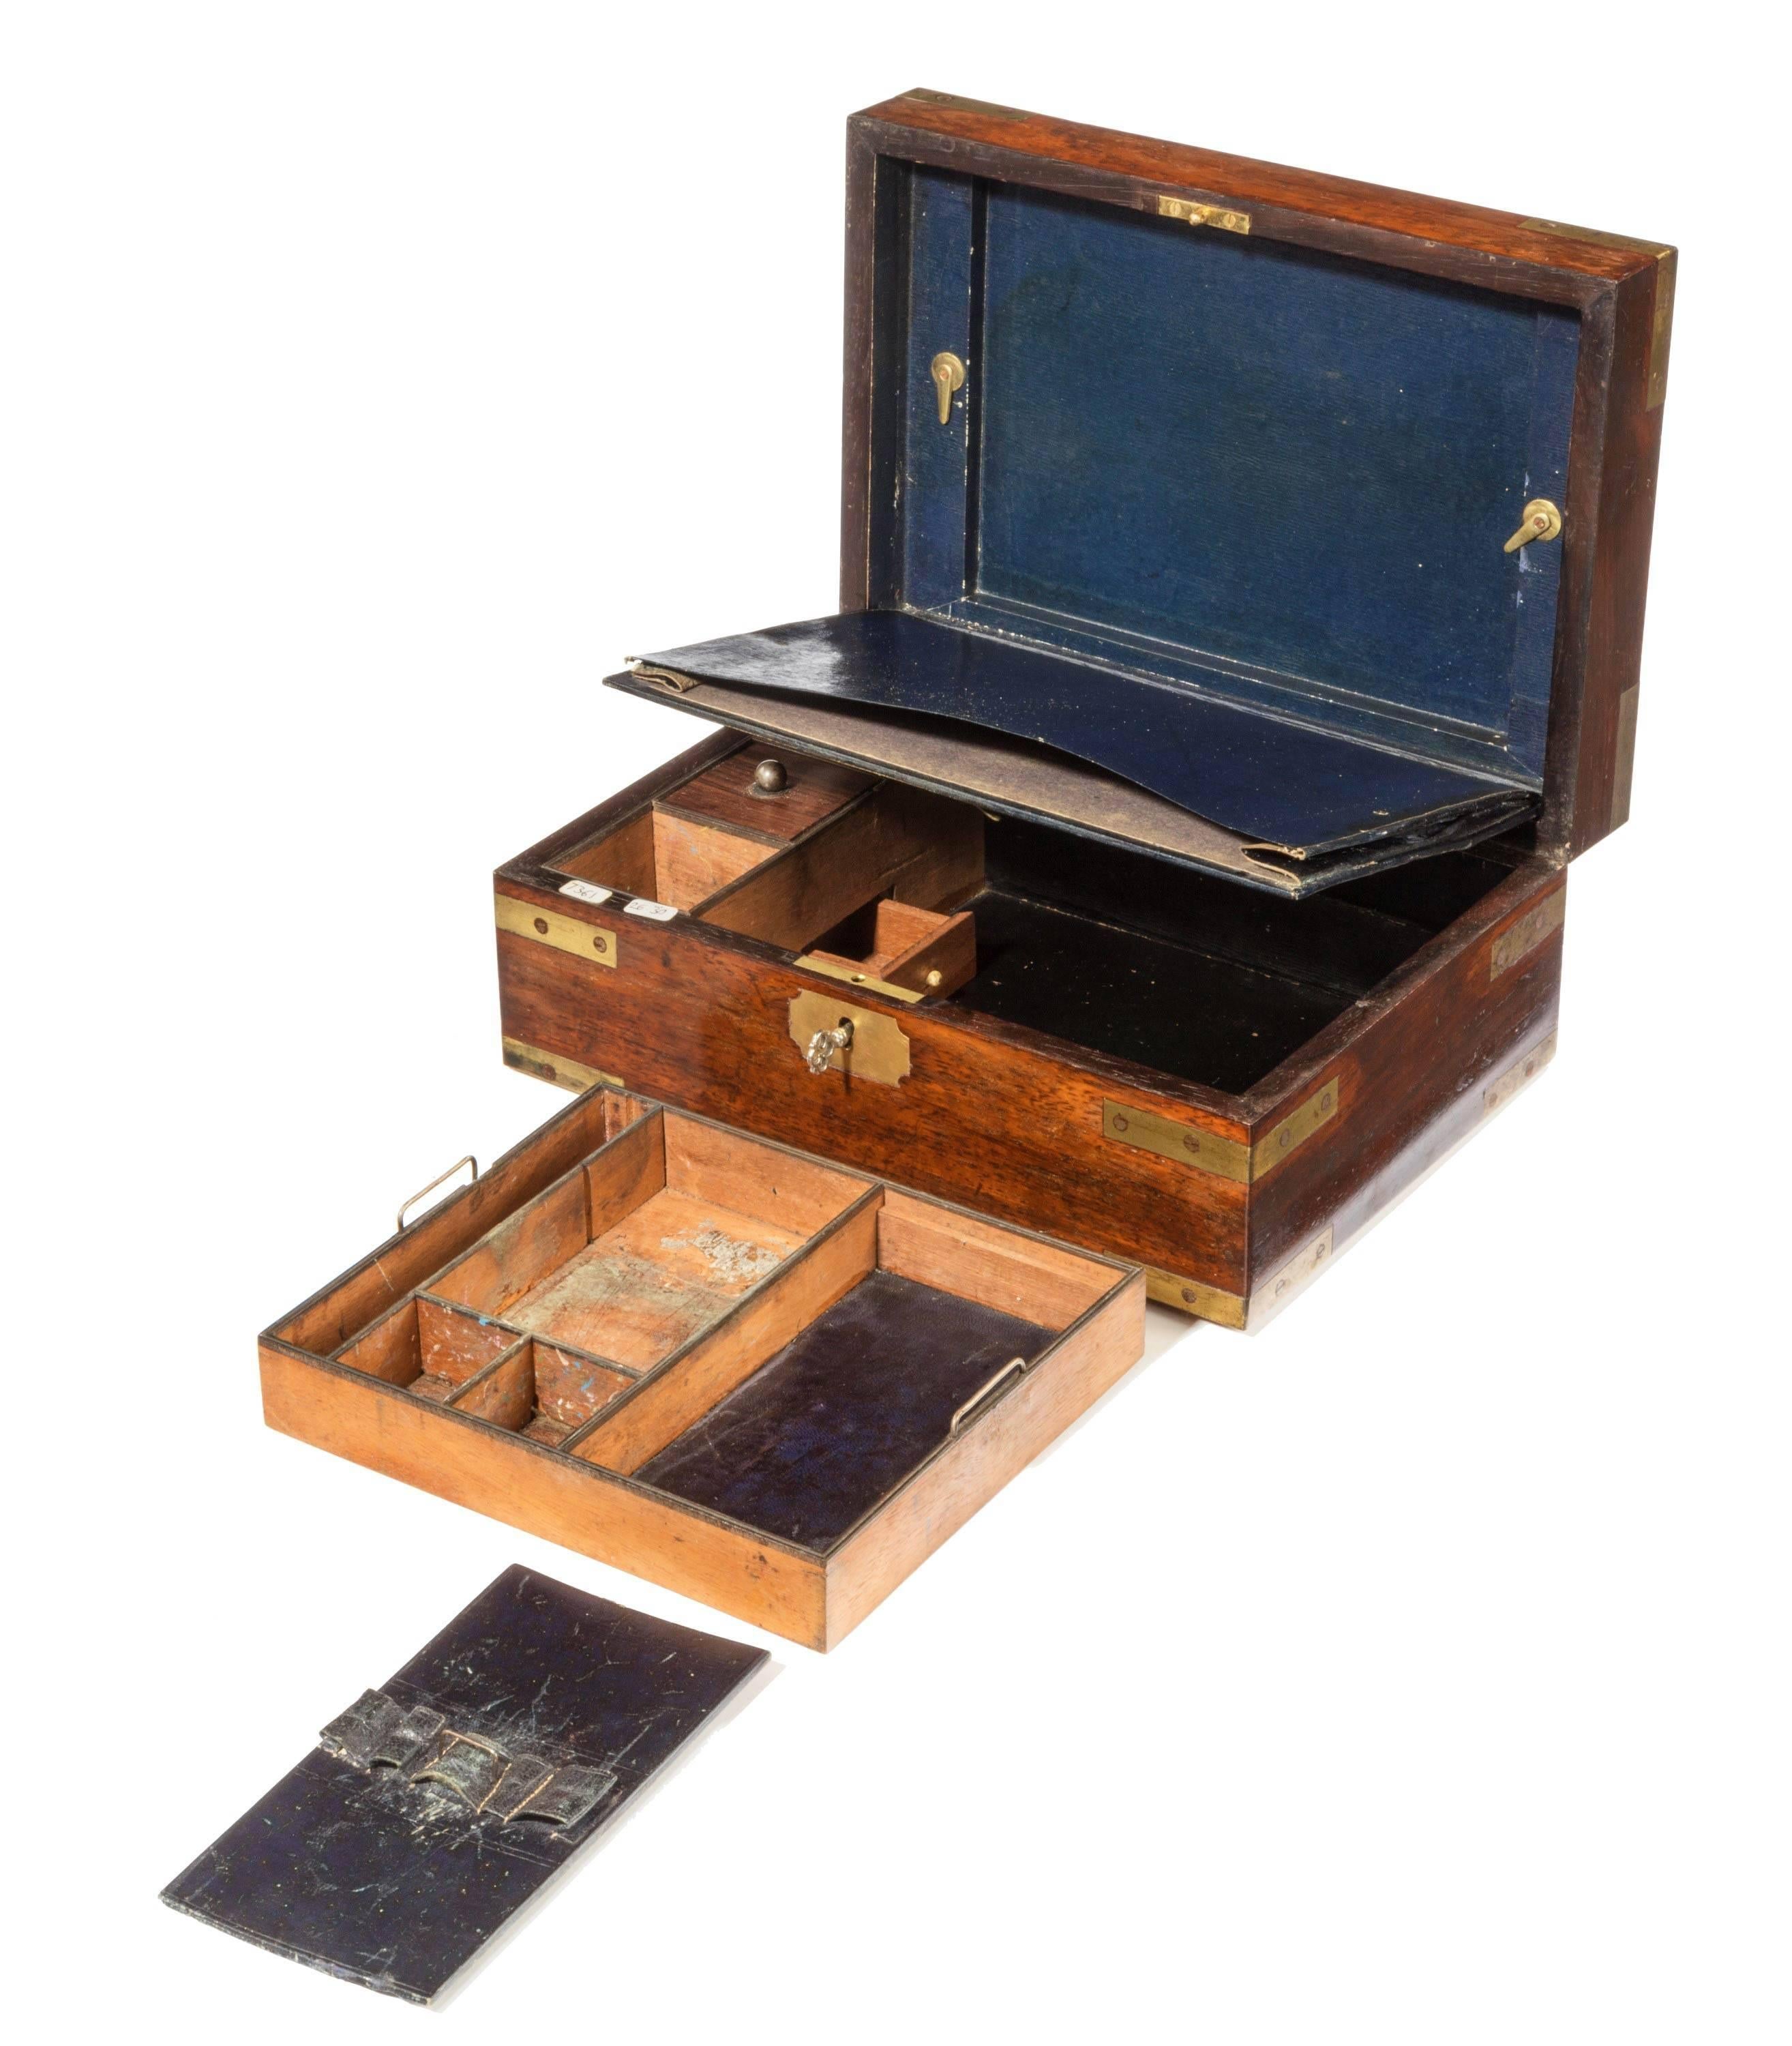 English Late 18th Century Brass-Mounted Mahogany Travelling Box